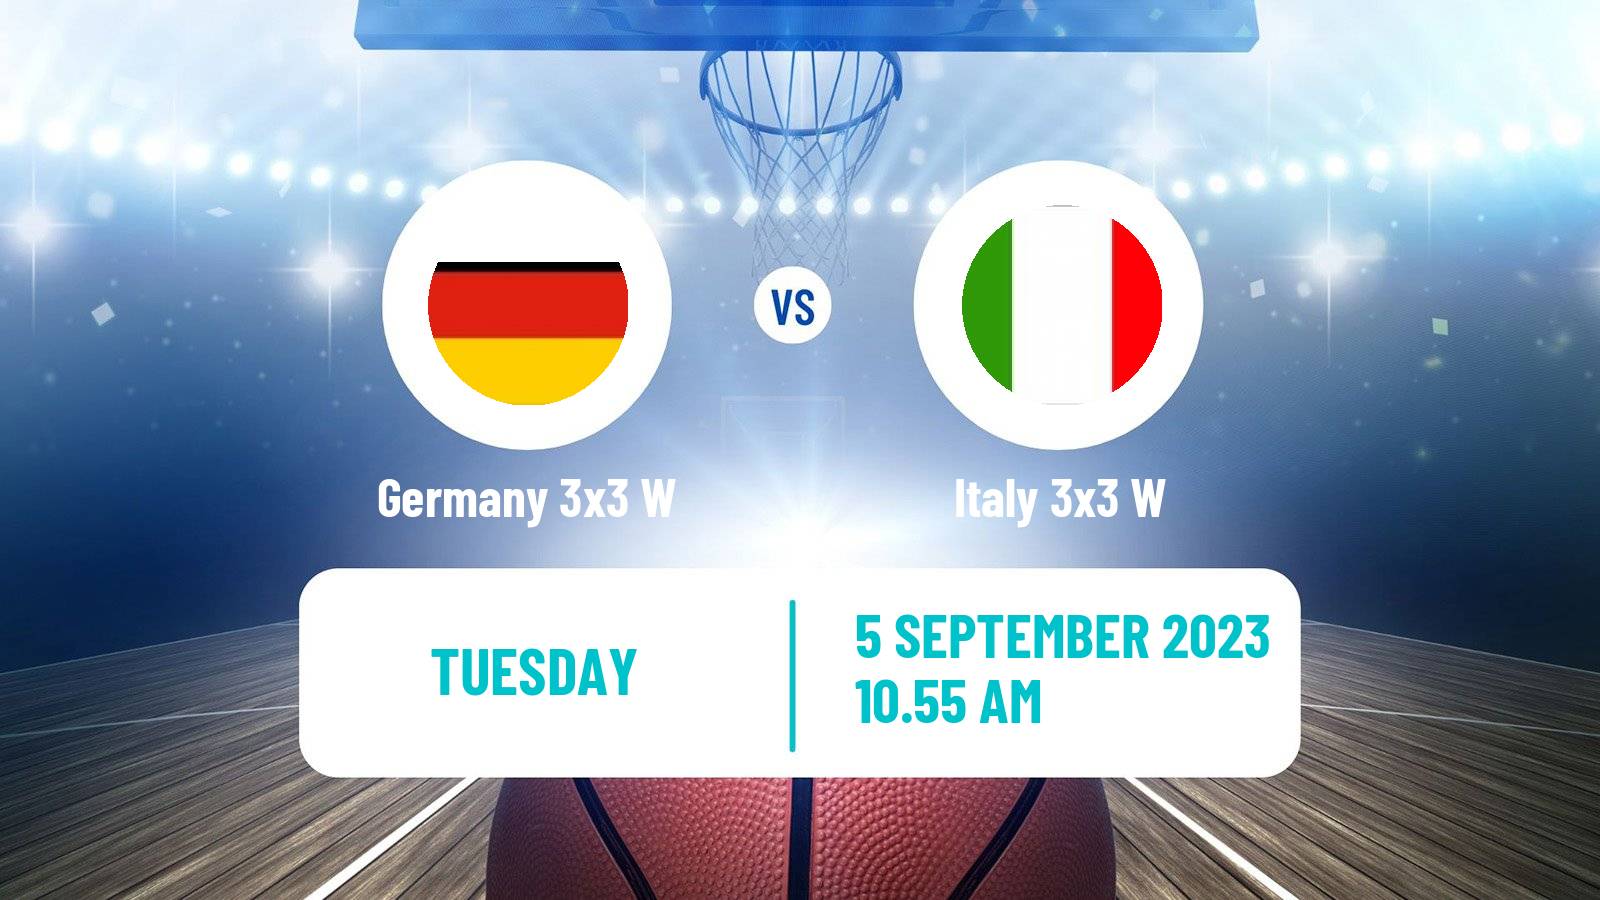 Basketball Europe Cup Basketball 3x3 Women Germany 3x3 W - Italy 3x3 W